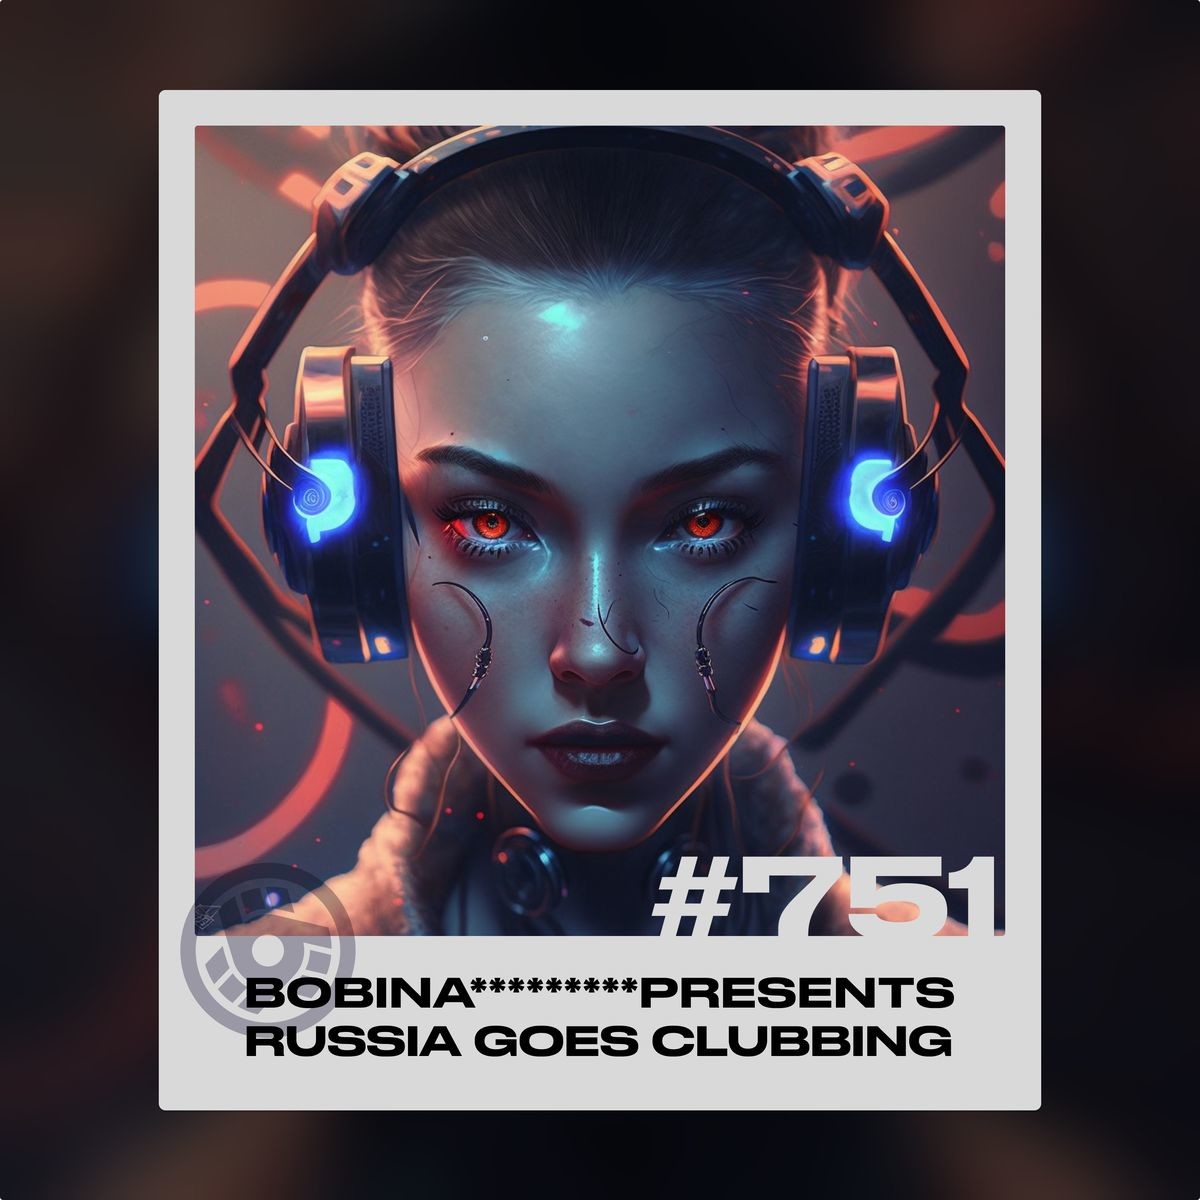 Russia Goes Clubbing #751